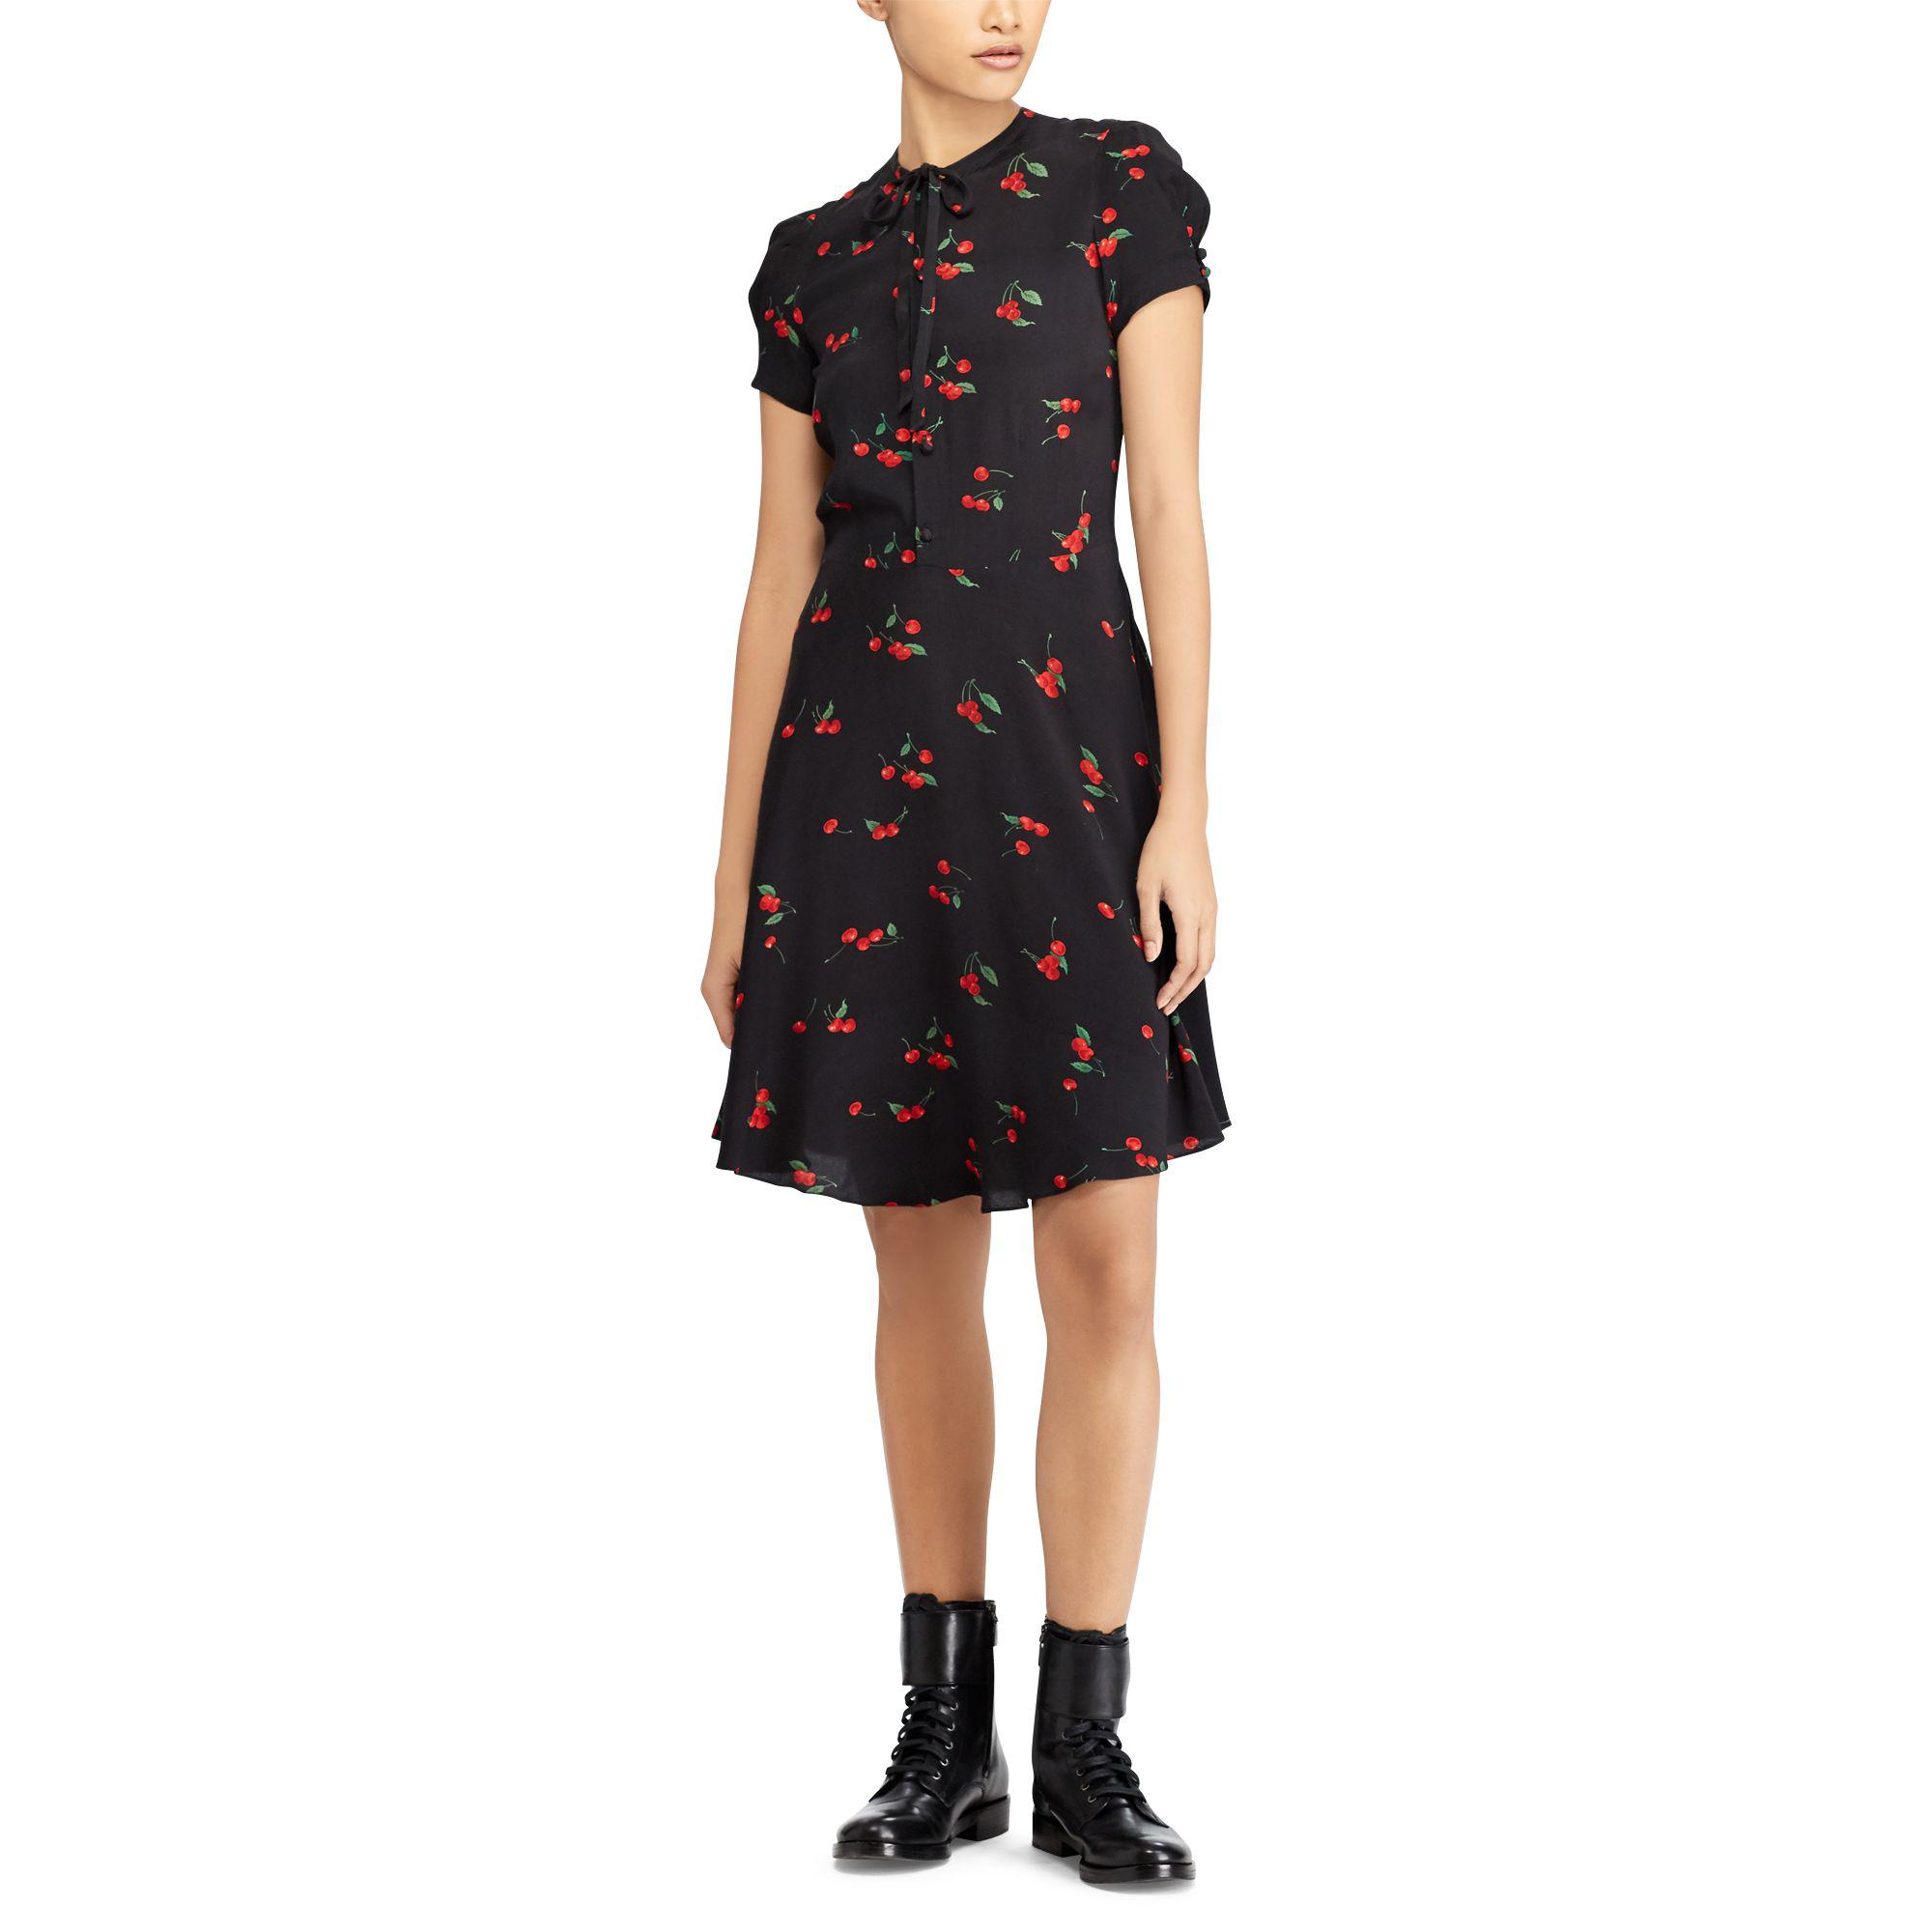 Polo Ralph Lauren Synthetic Cherry-print Crepe Dress in Black - Lyst